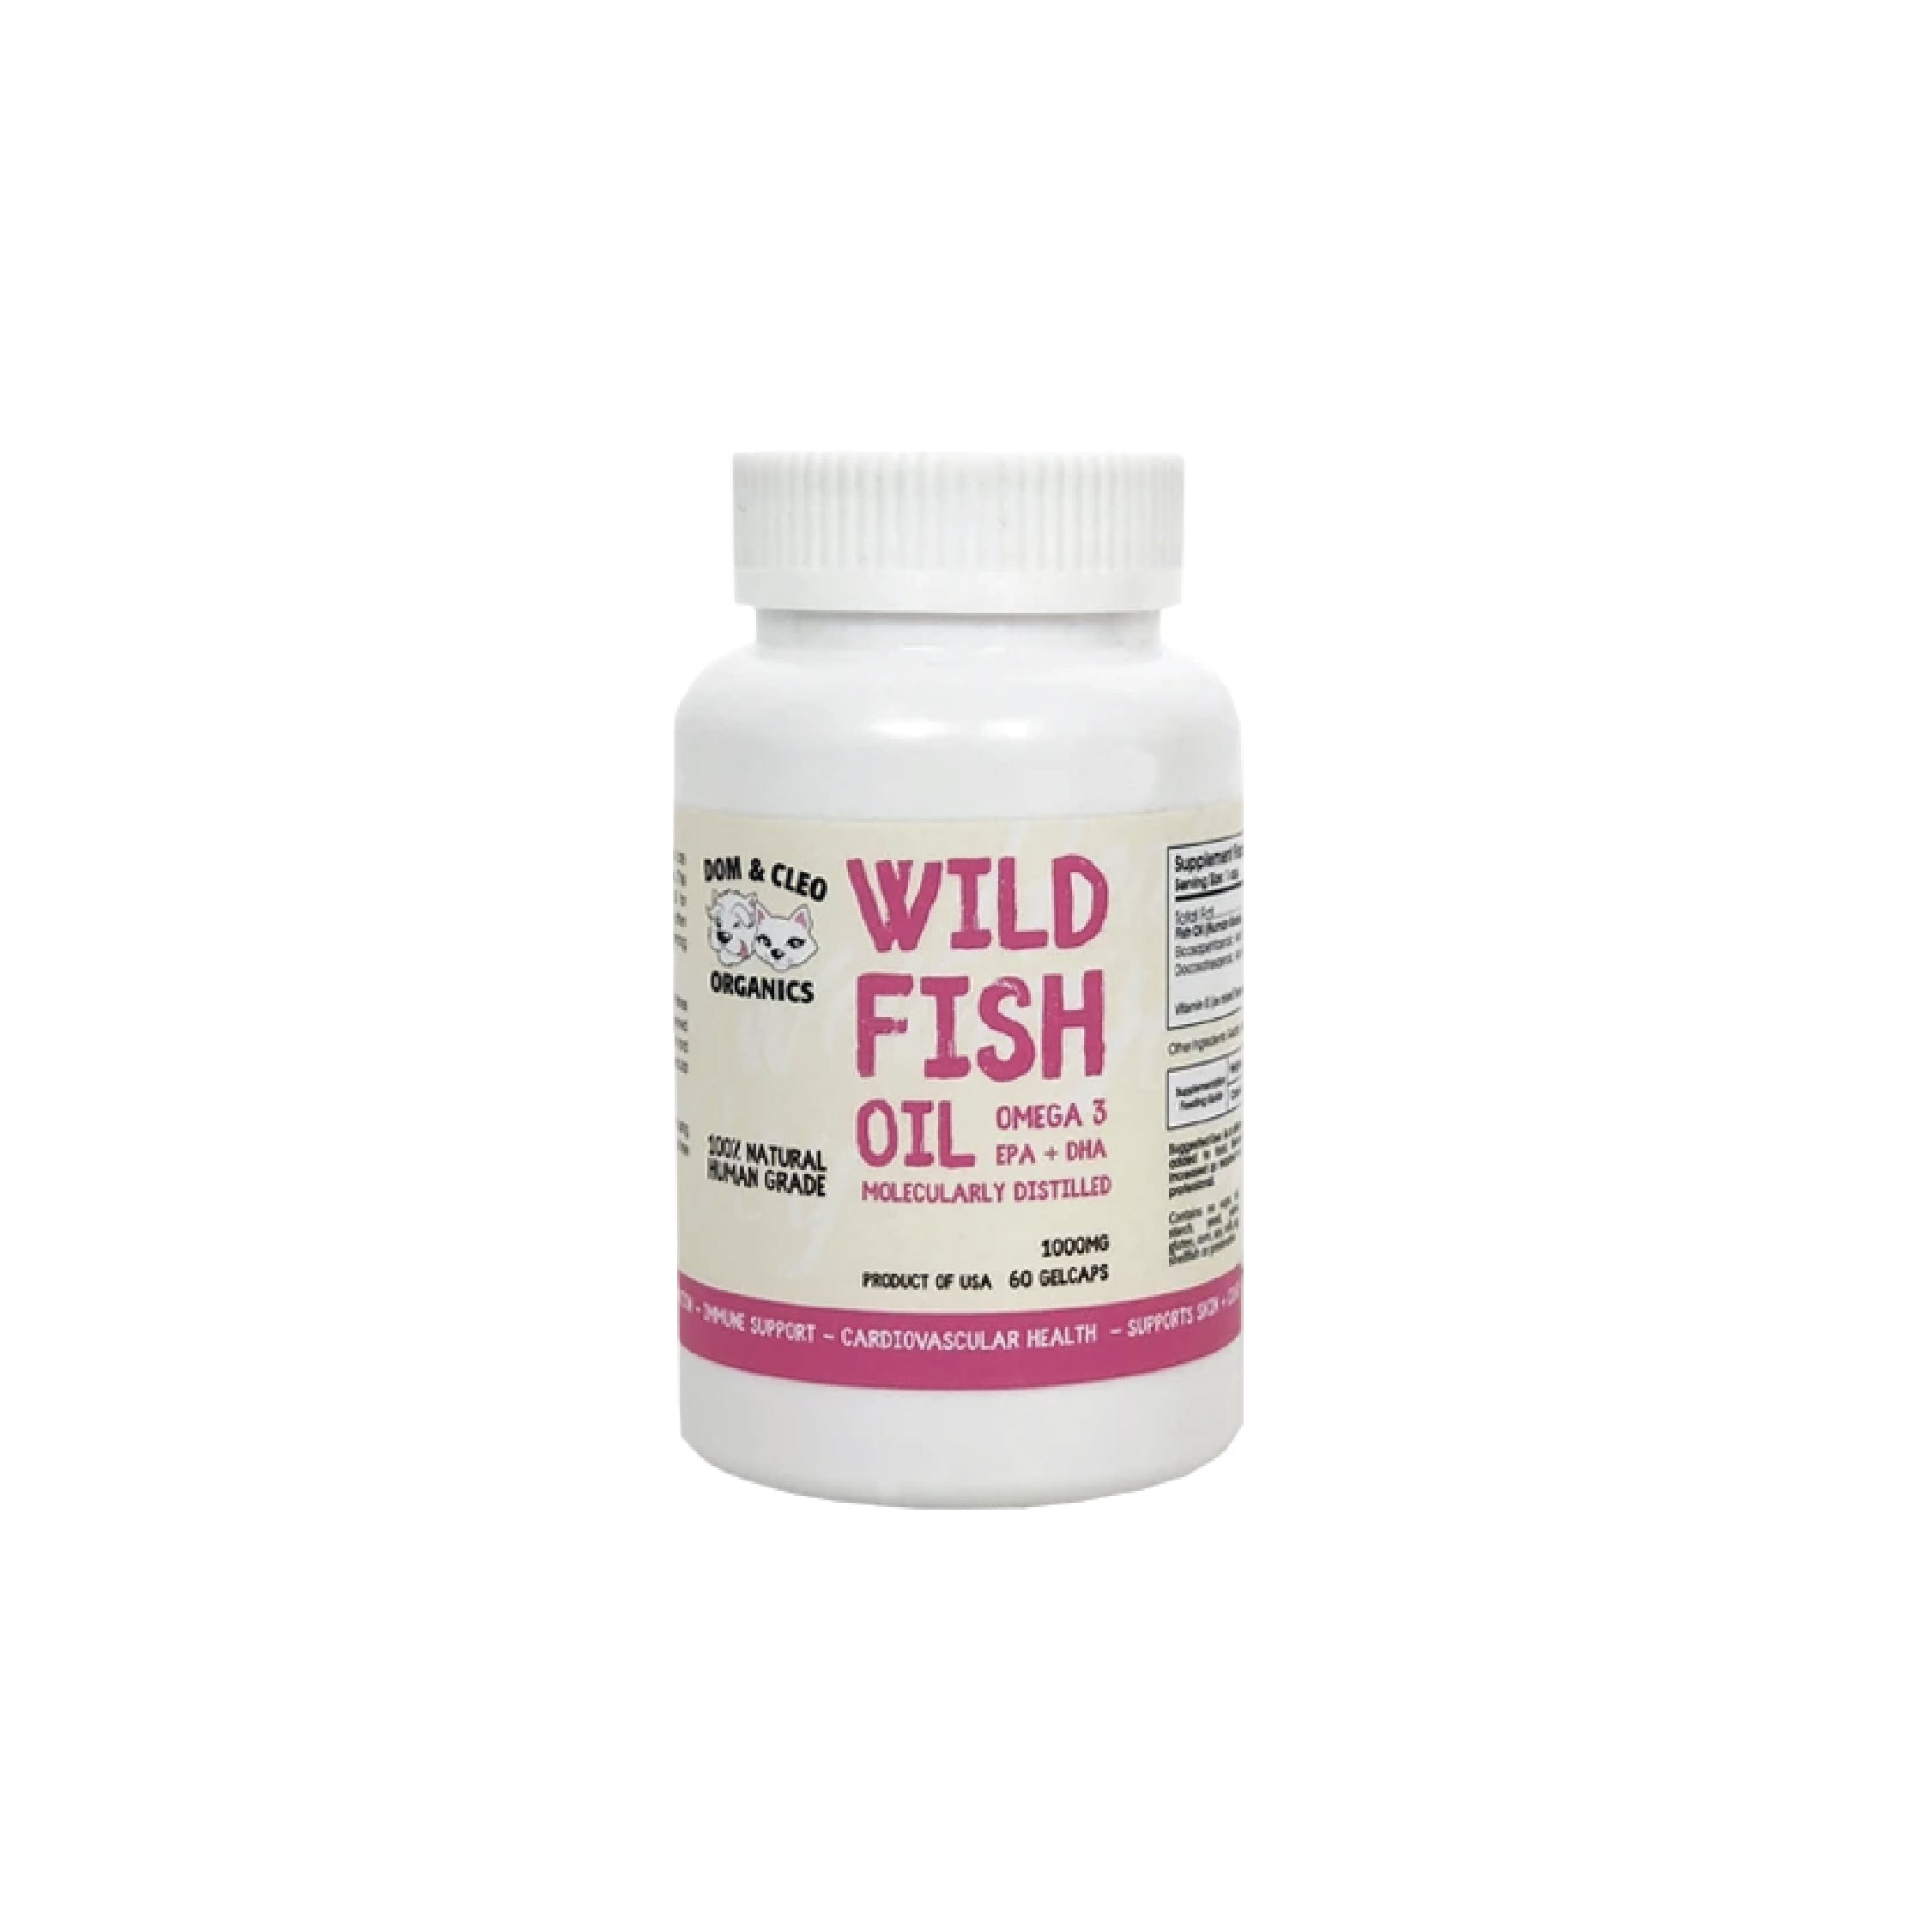 Dom & Cleo Wild Fish Oil Pet Supplements (60caps)